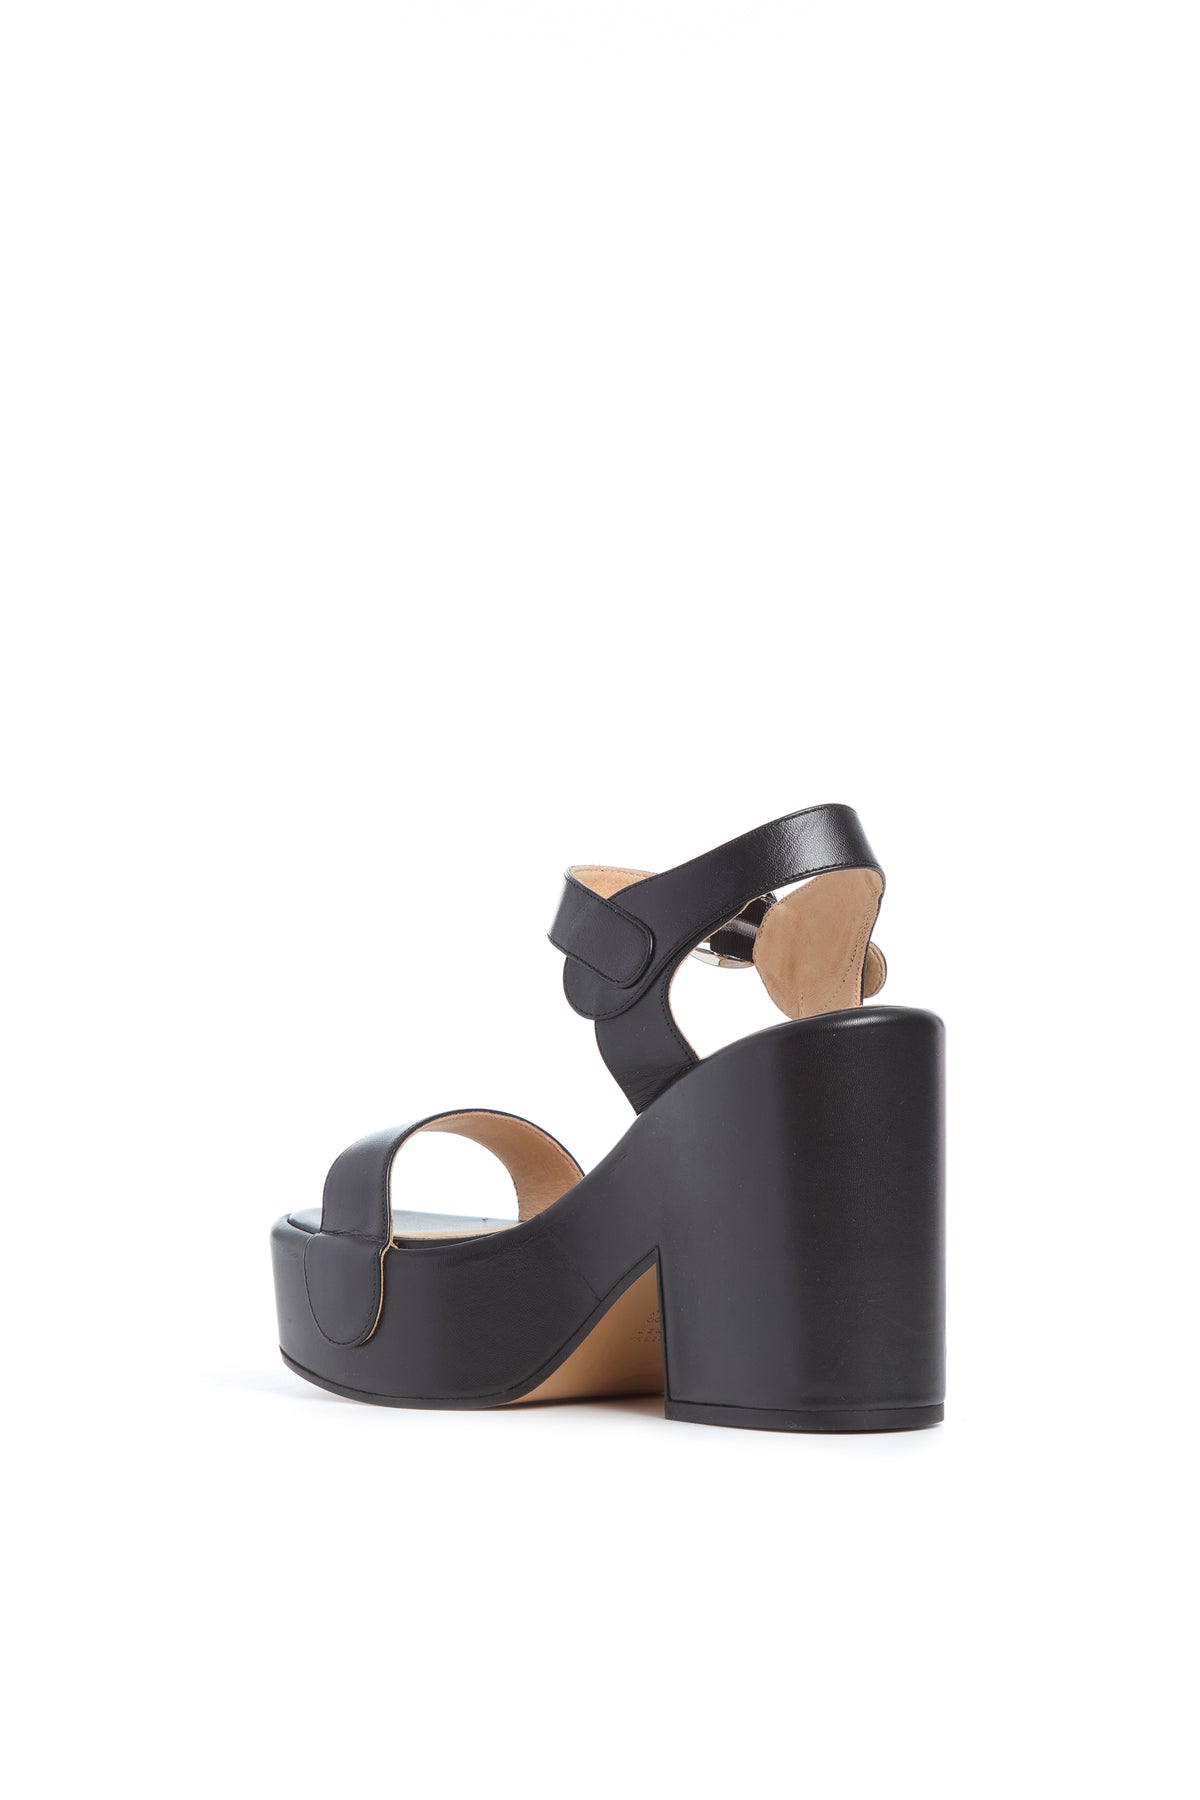 Iris Platform Sandal in Black Leather